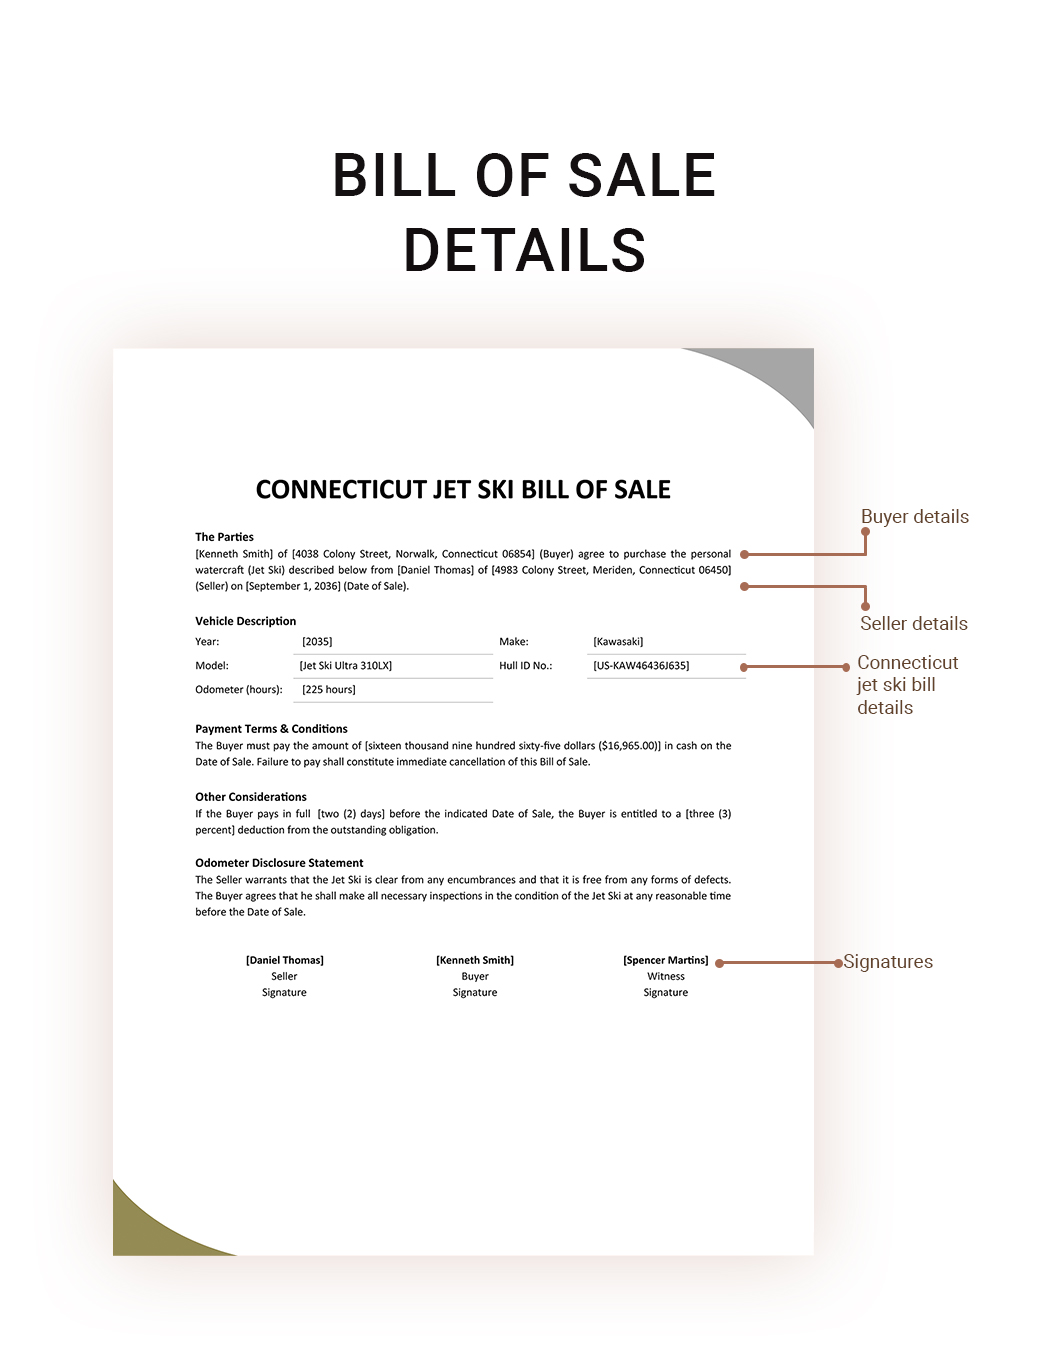 Connecticut Jet Ski Bill Of Sale Template